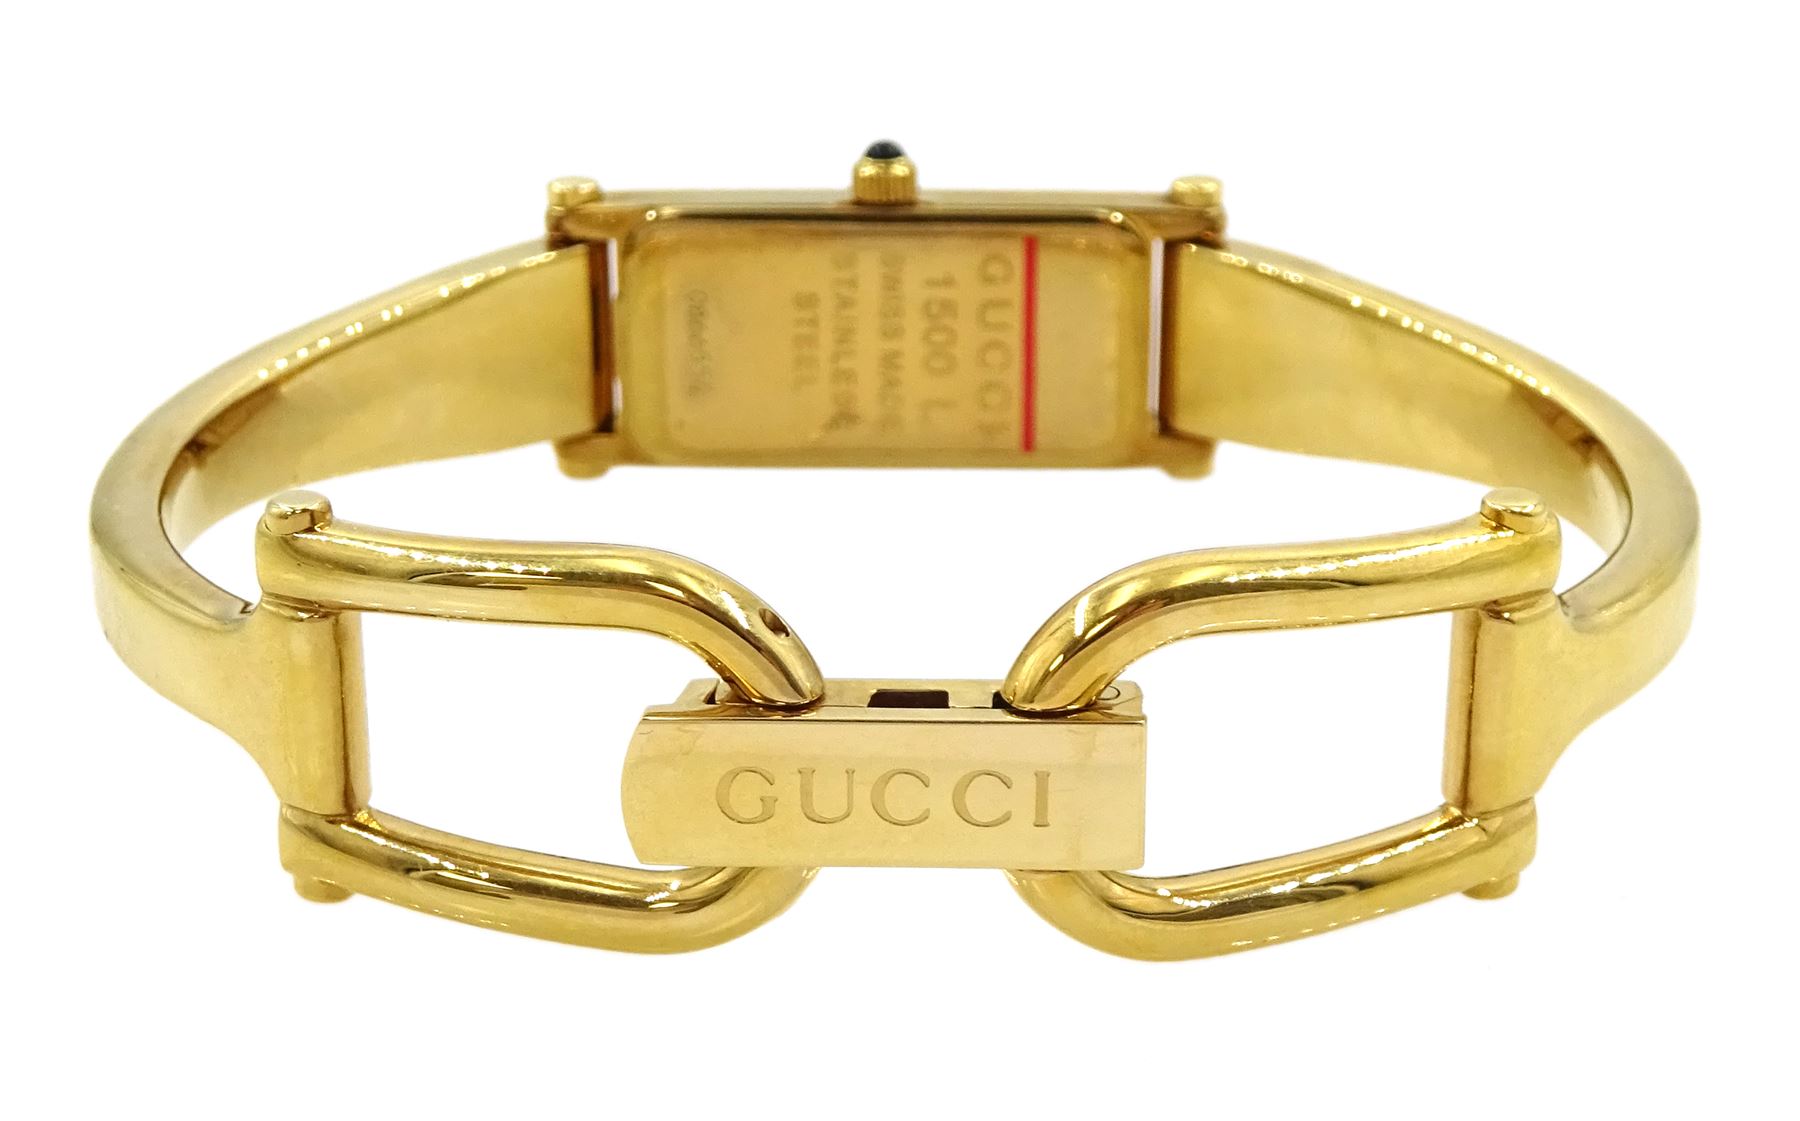 Gucci gold-plated ladies quartz wristwatch - Image 3 of 5